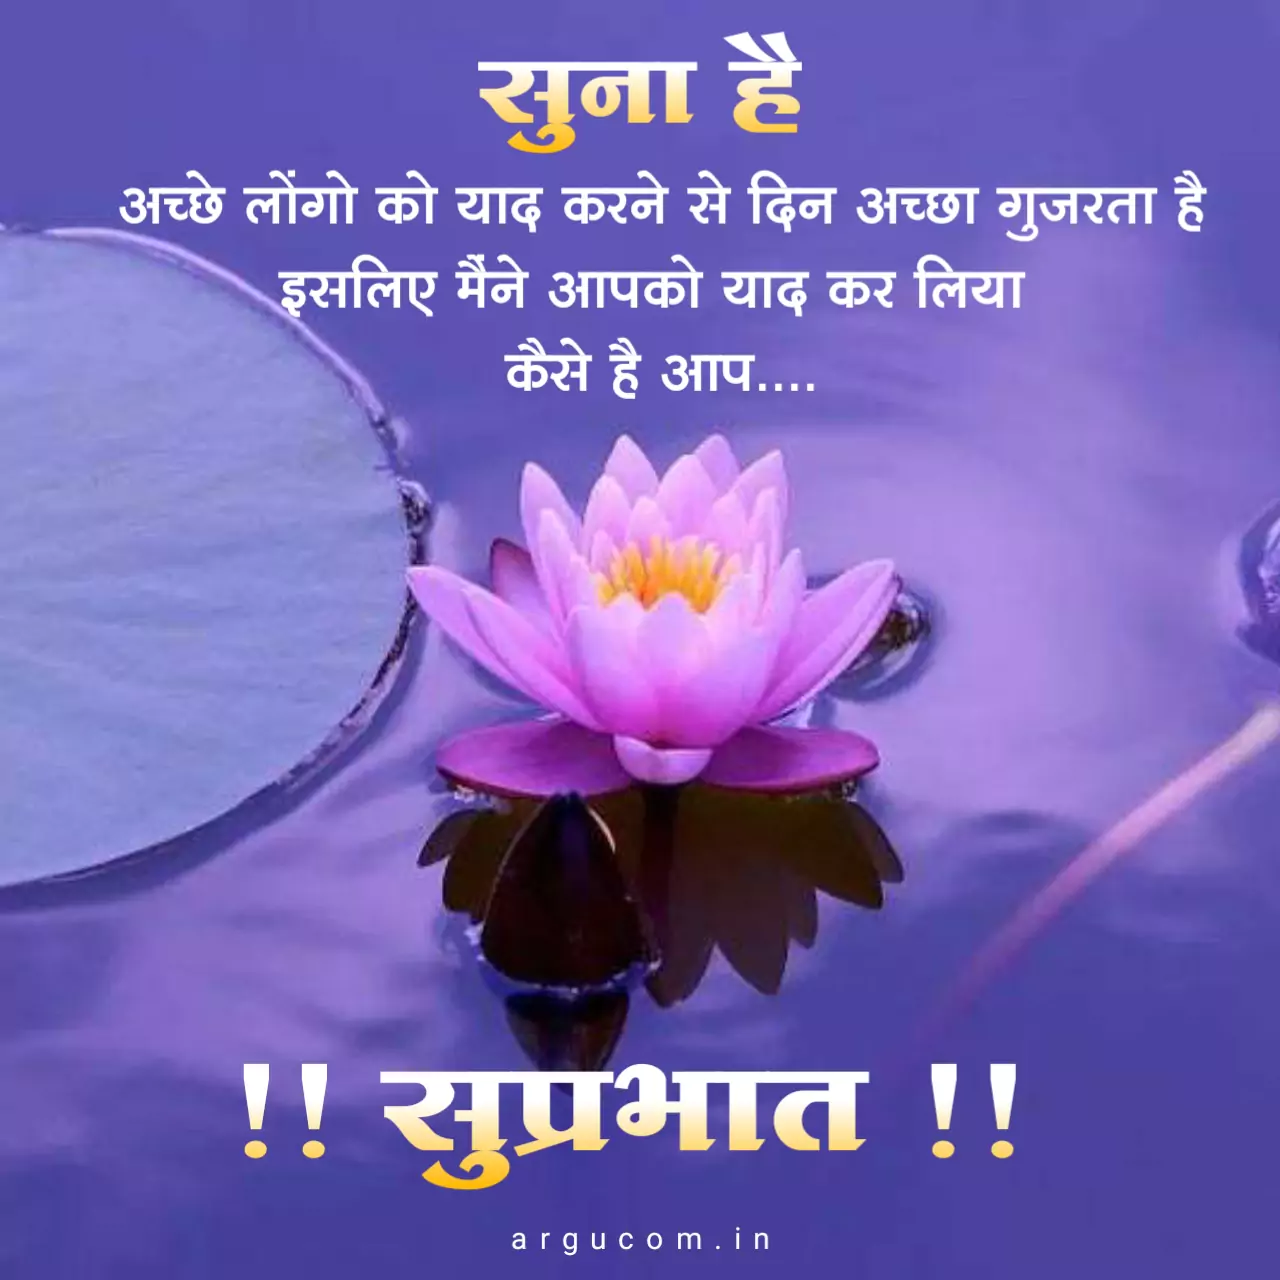 Good morning images in hindi